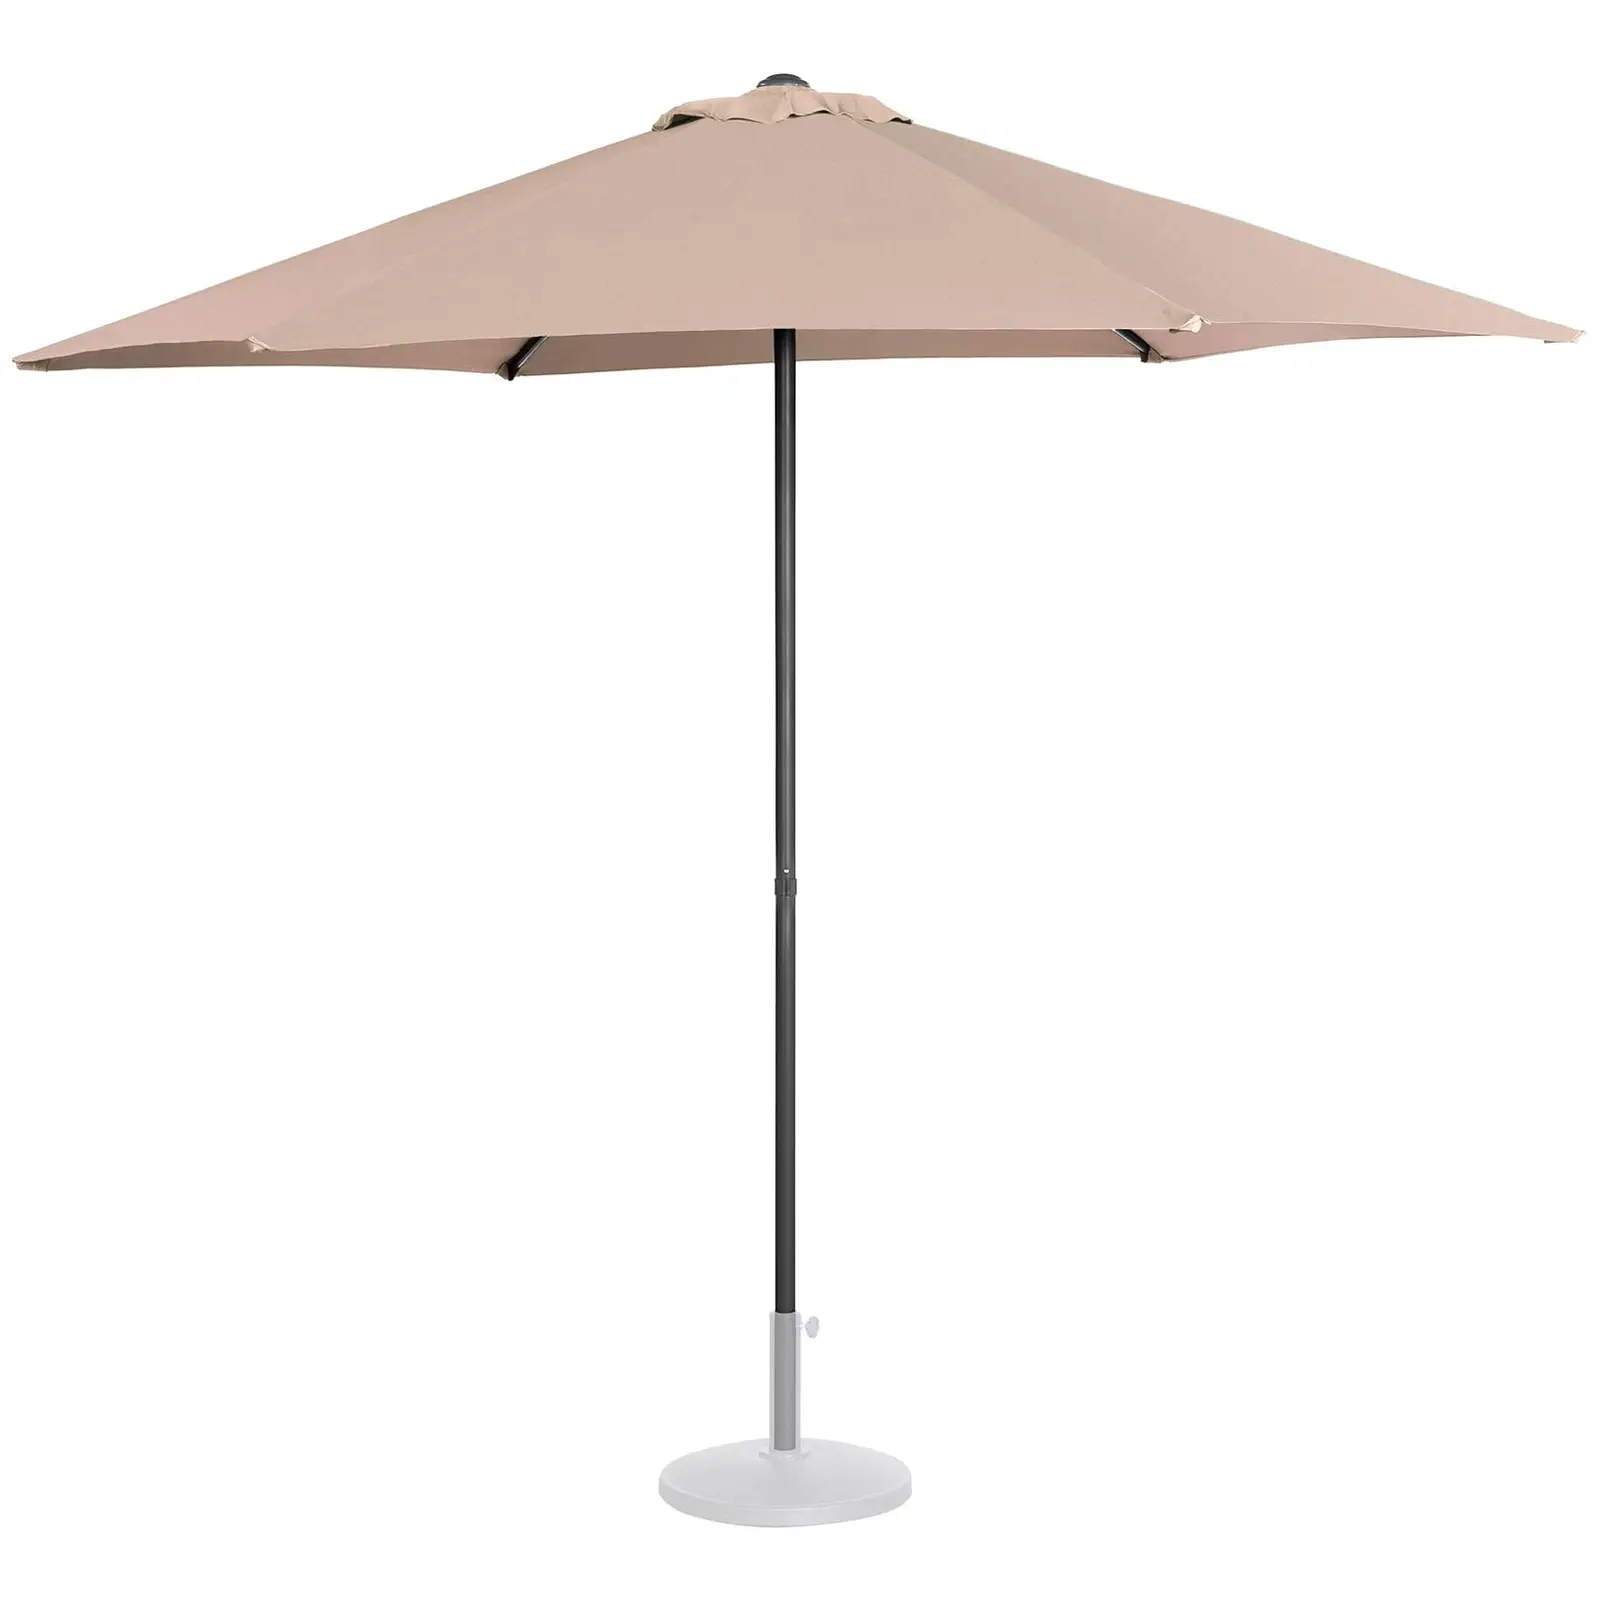 Grand parasol - Crème - Hexagonal - Ø 270 cm